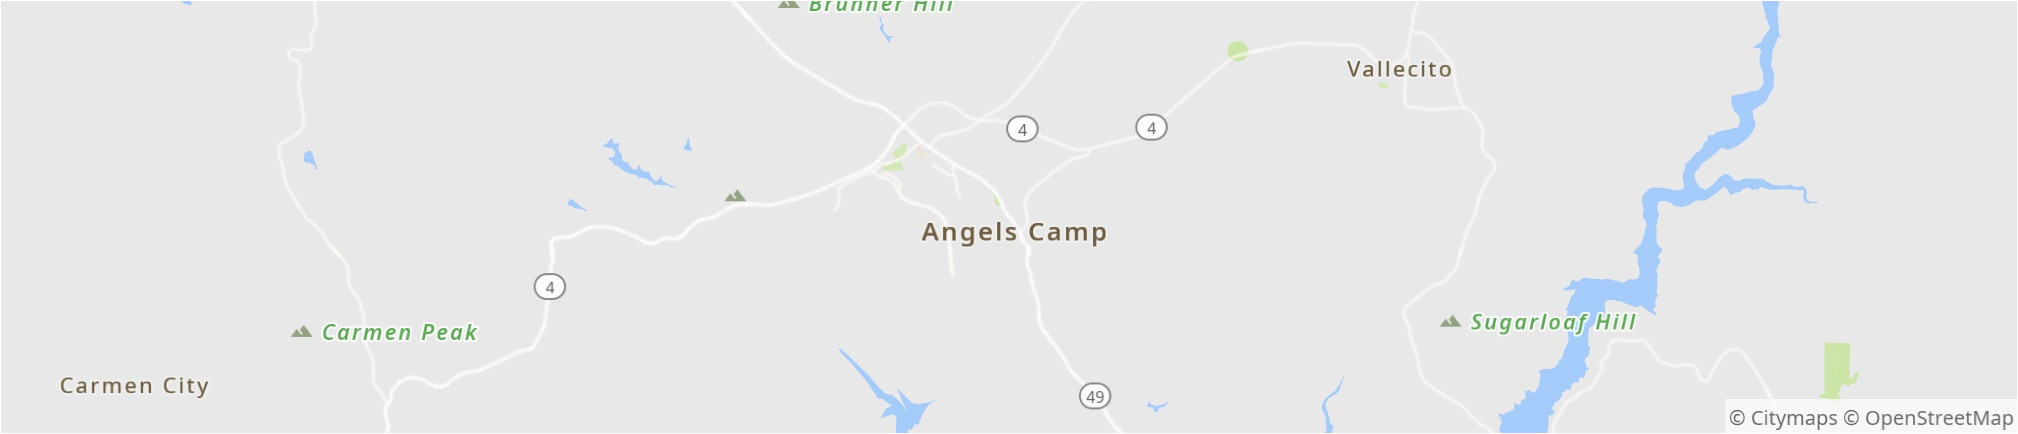 angels camp 2019 best of angels camp ca tourism tripadvisor